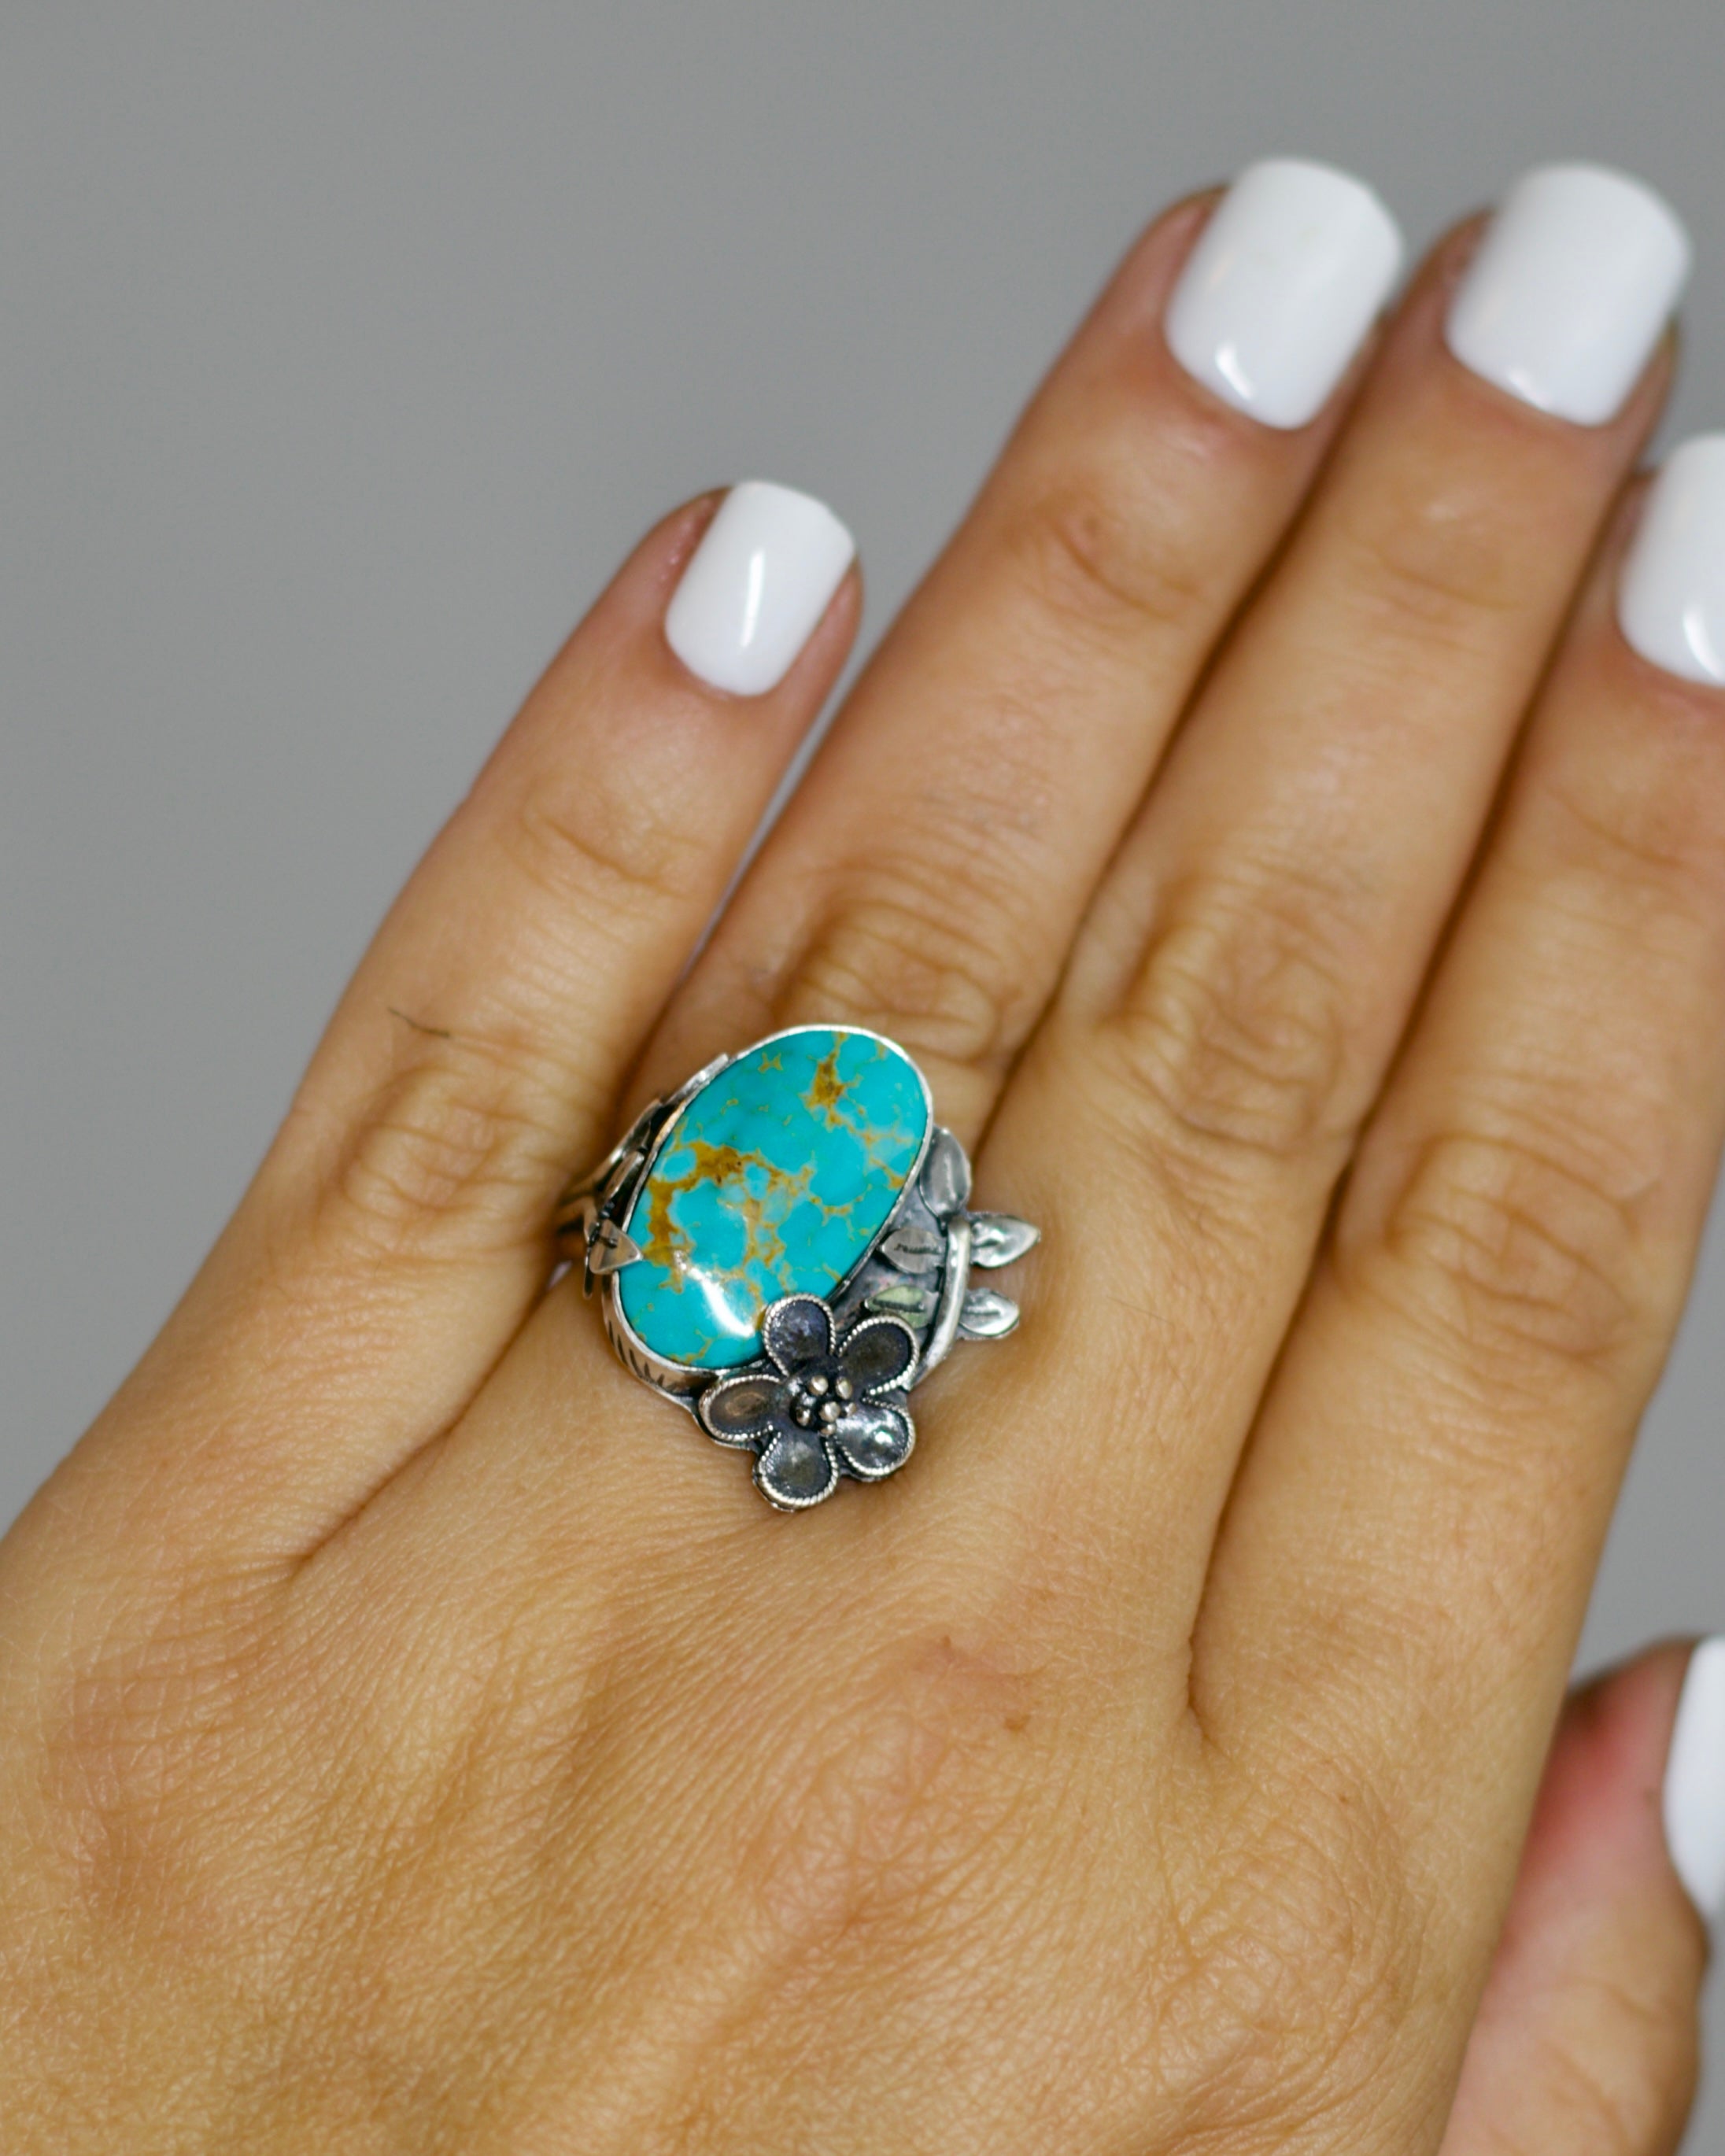 Naturaleza Turquoise Ring.